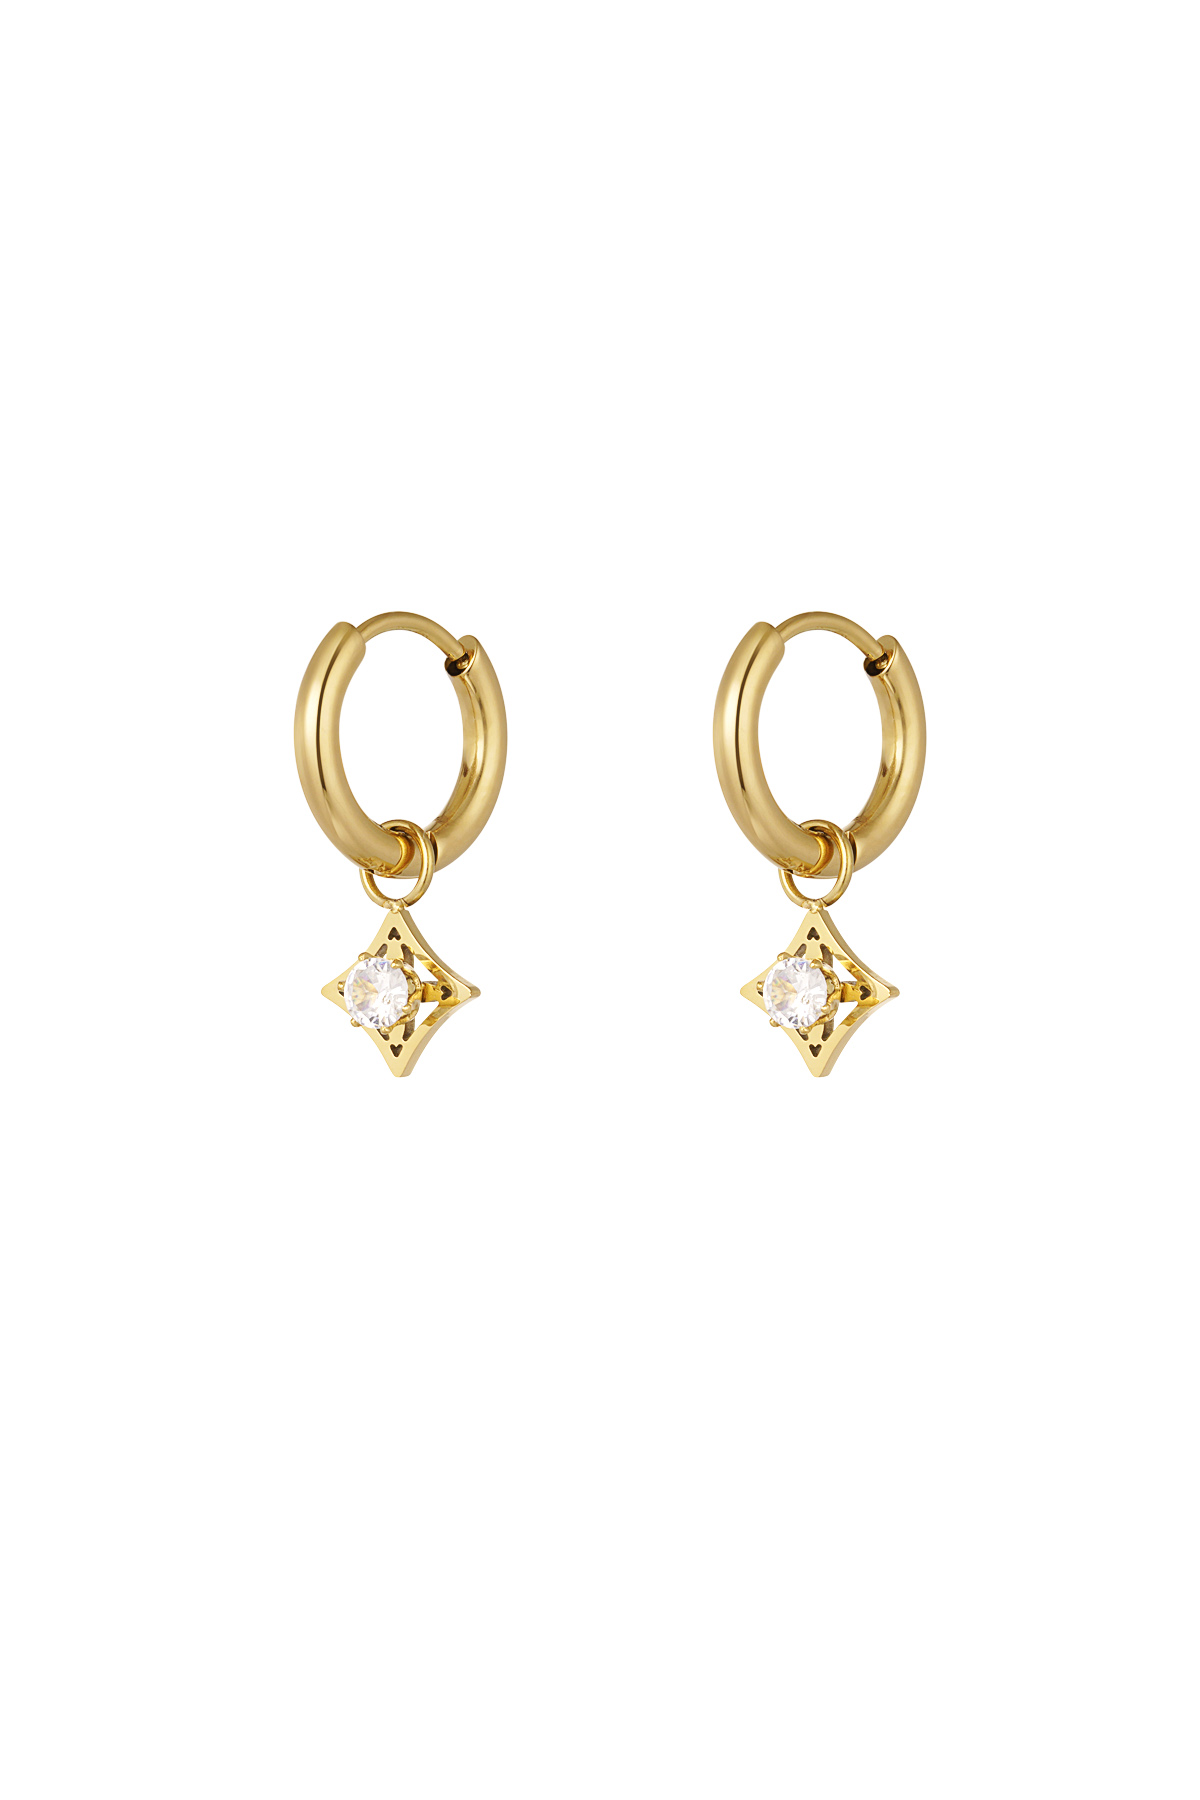 Earrings minimalist diamond with stone - gold h5 